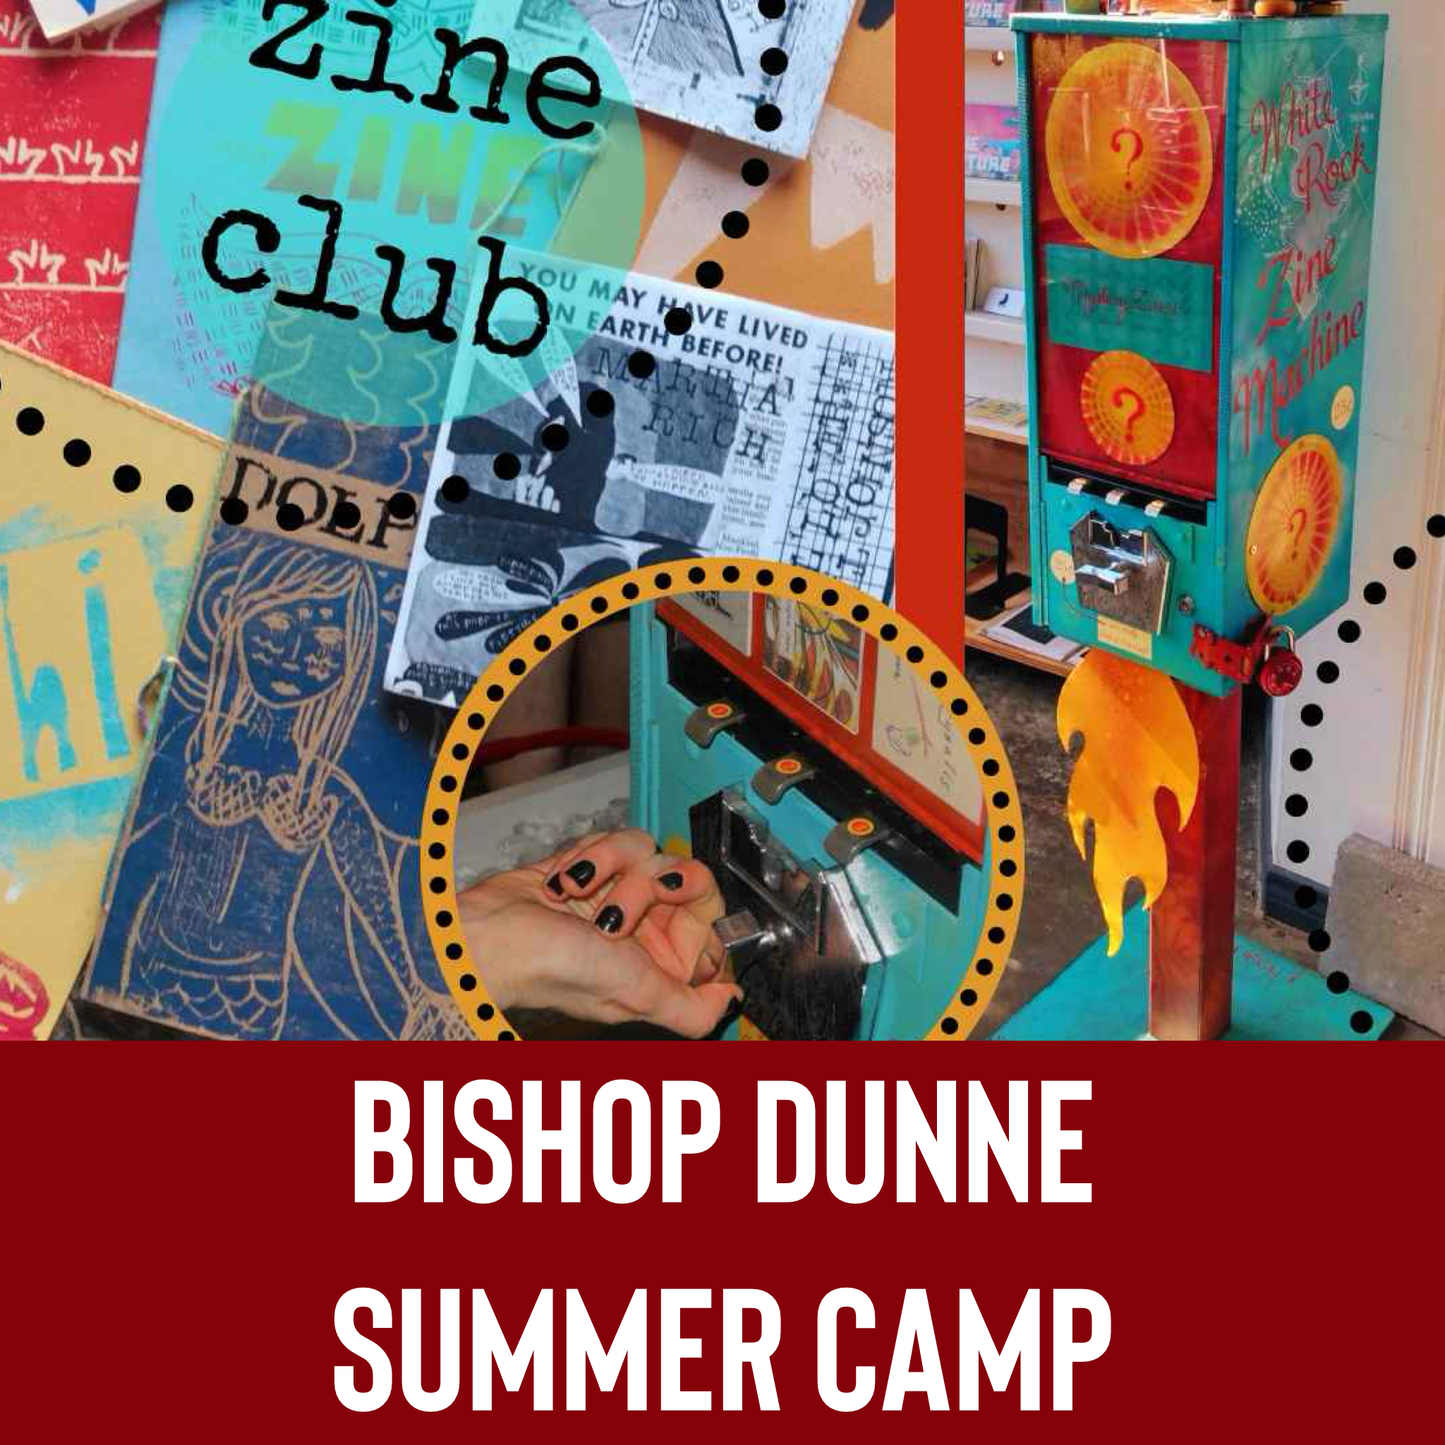 June 24-27  Zine Club Camp: More than graphic novels and comics!